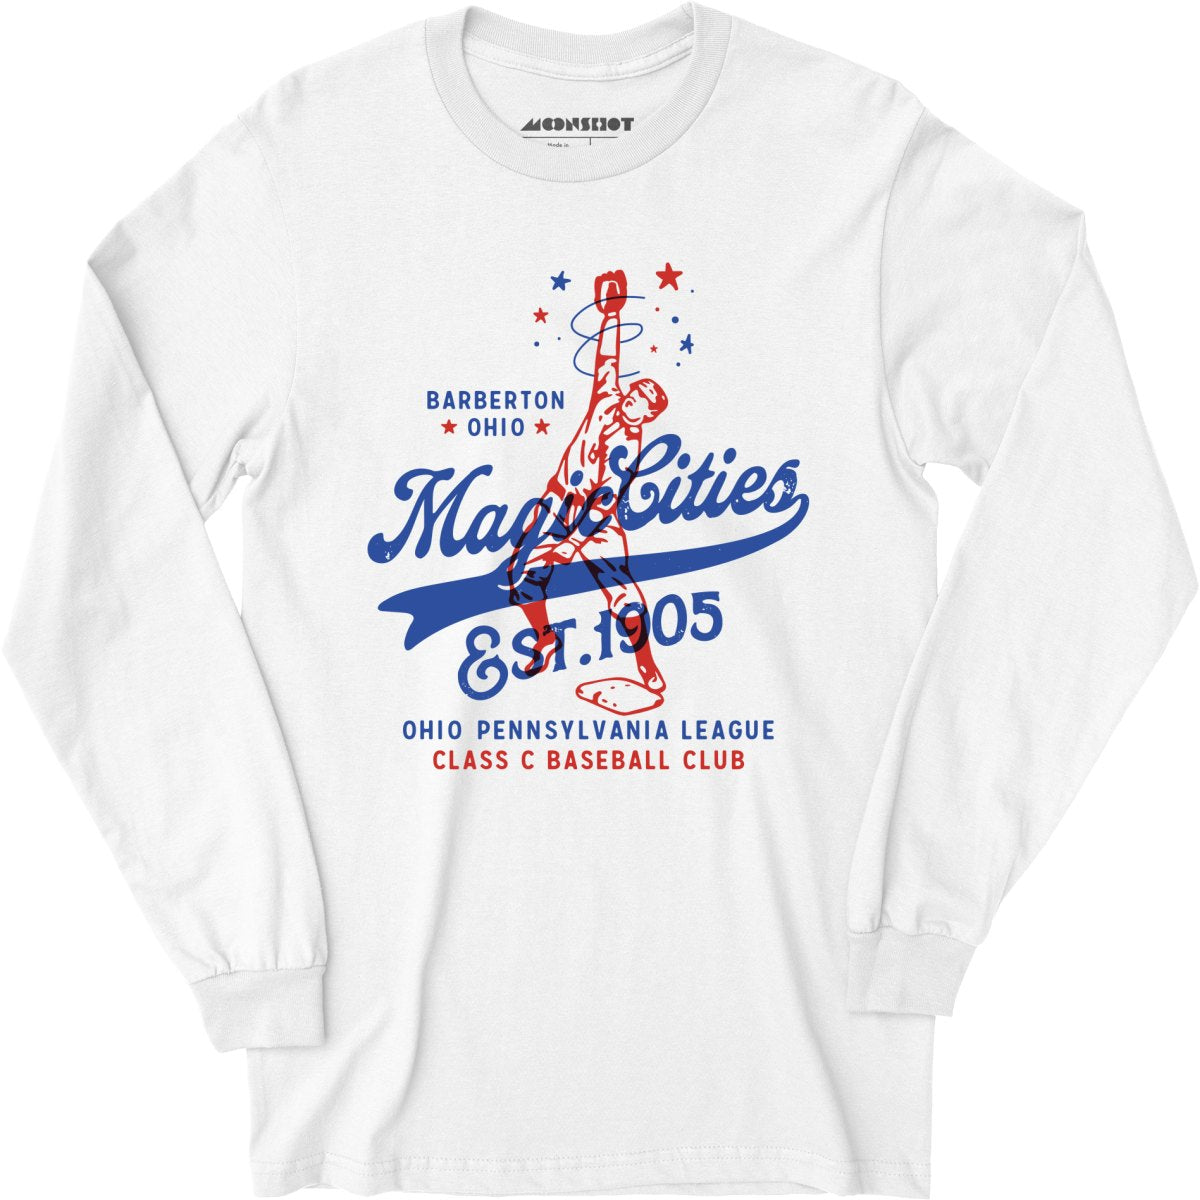 Barberton Magic Cities - Ohio - Vintage Defunct Baseball Teams - Long Sleeve T-Shirt